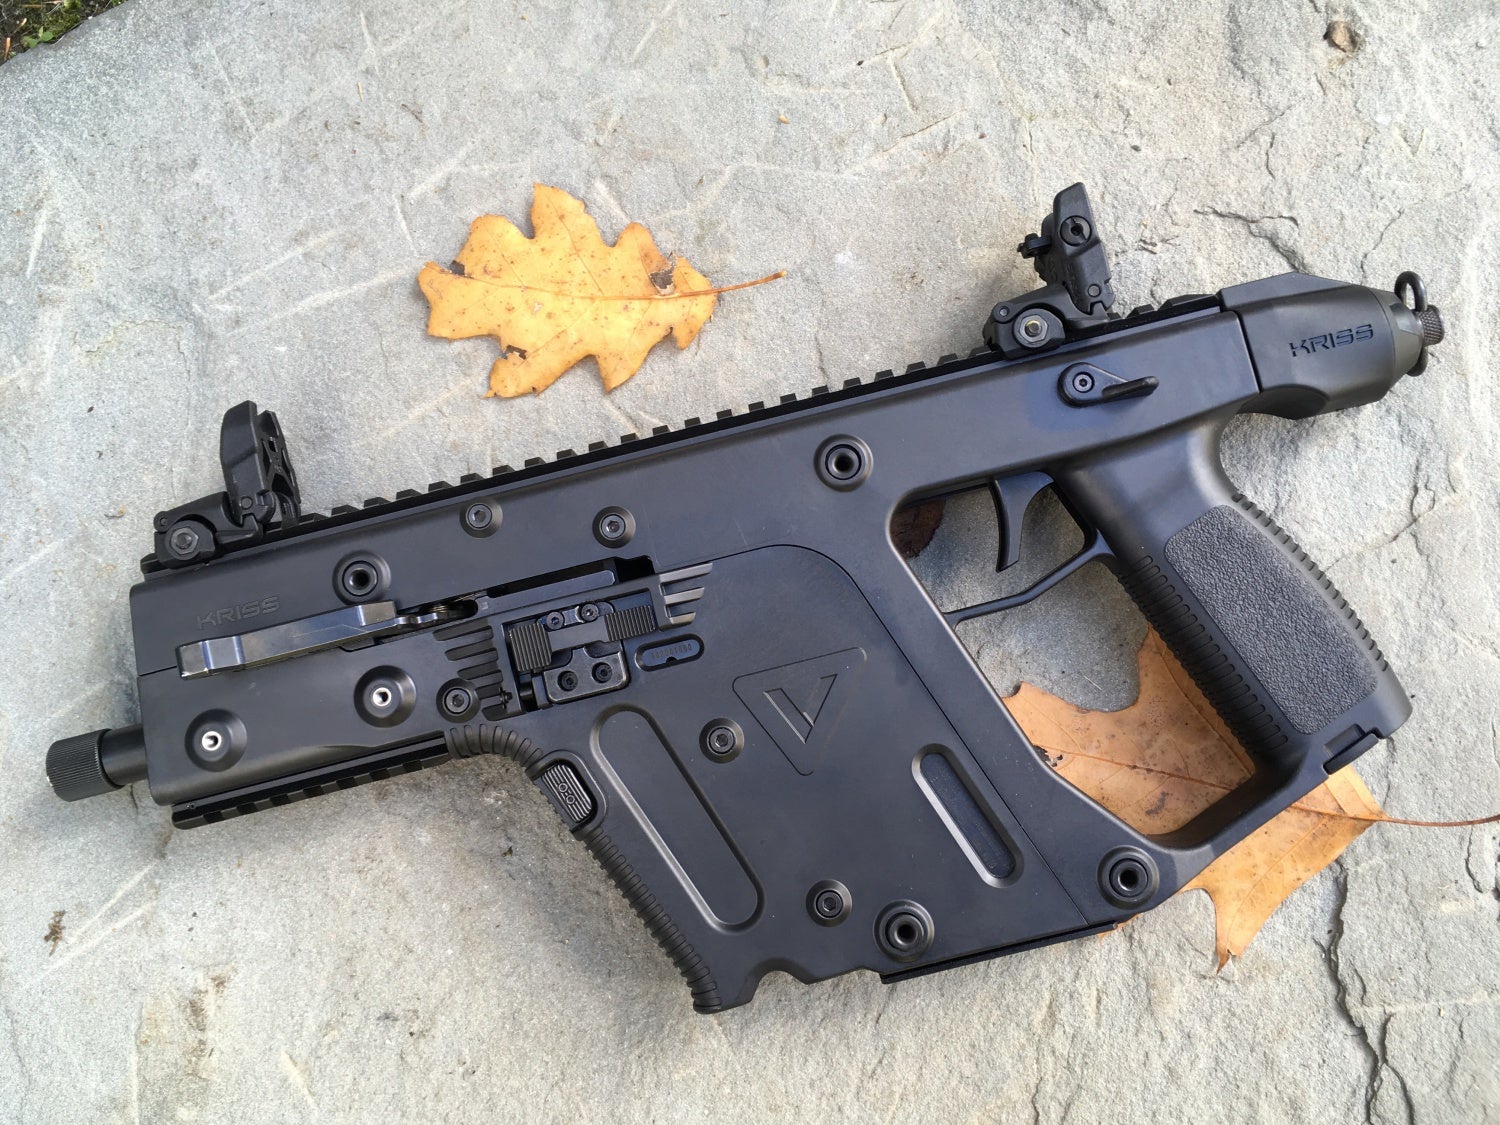 TFB REVIEW: KRISS Vector in 10mm! - The Firearm BlogThe Firearm Blog